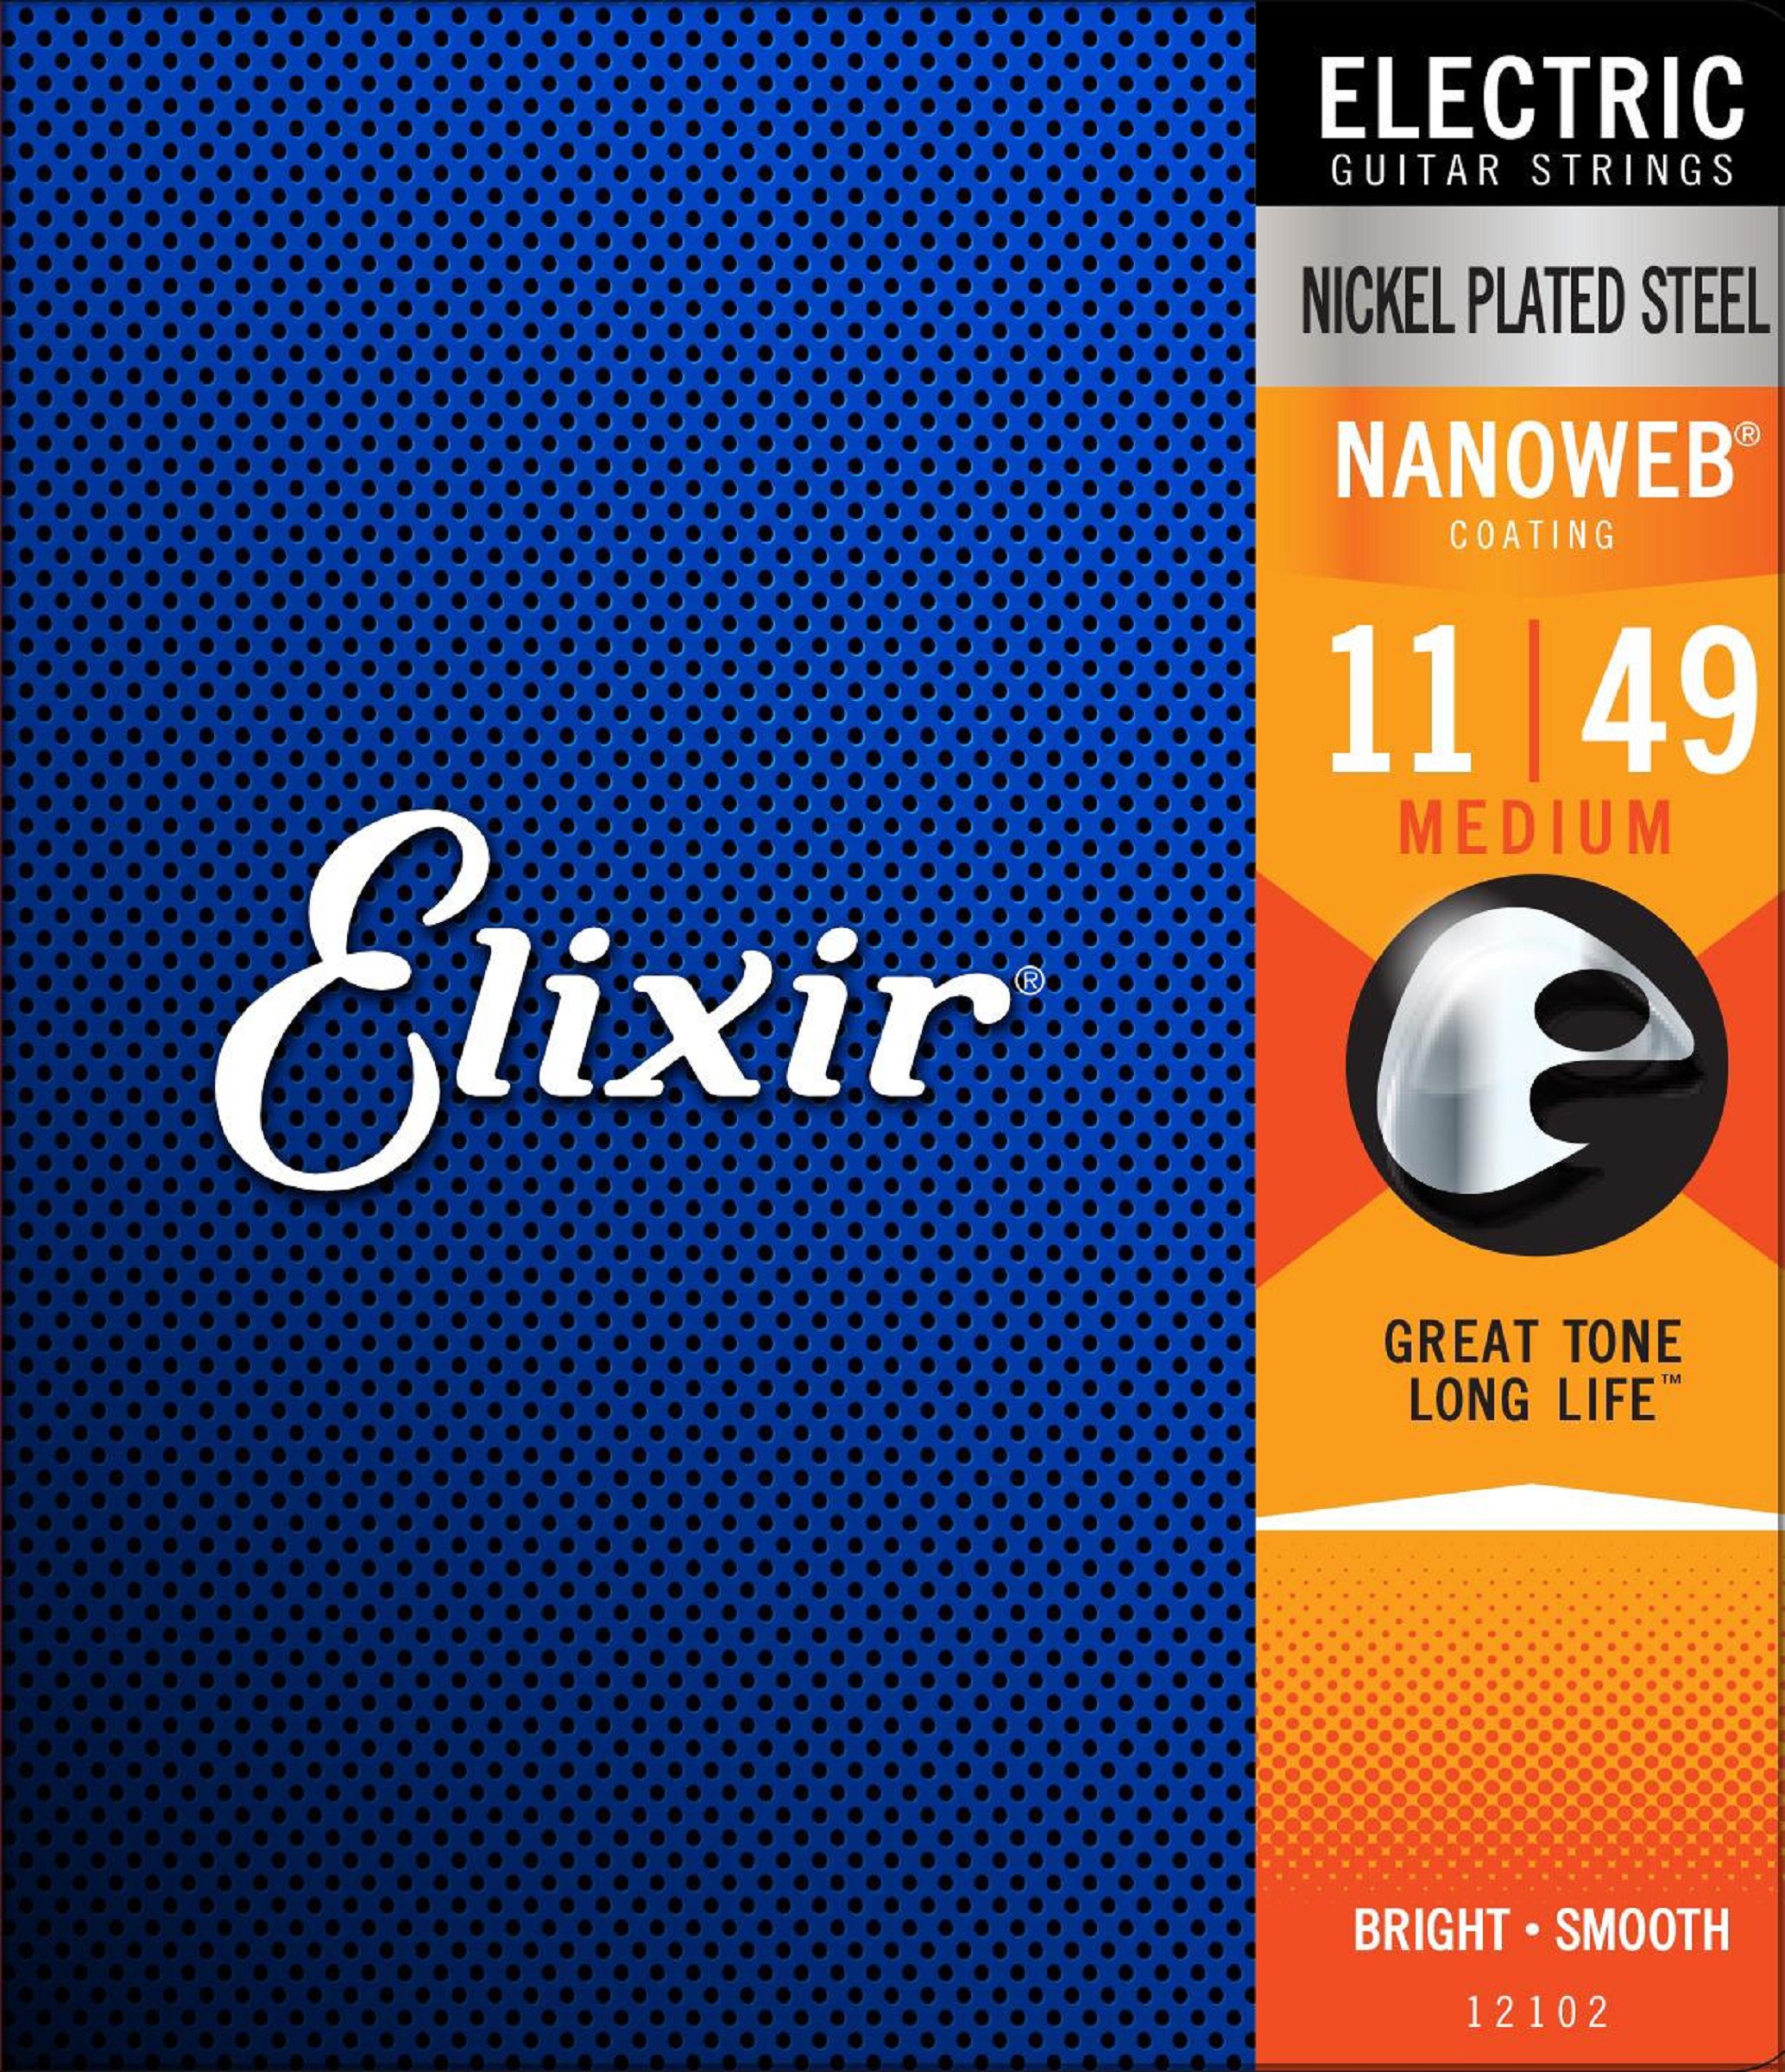 Elixir 12102 Nanoweb Medium 011-049